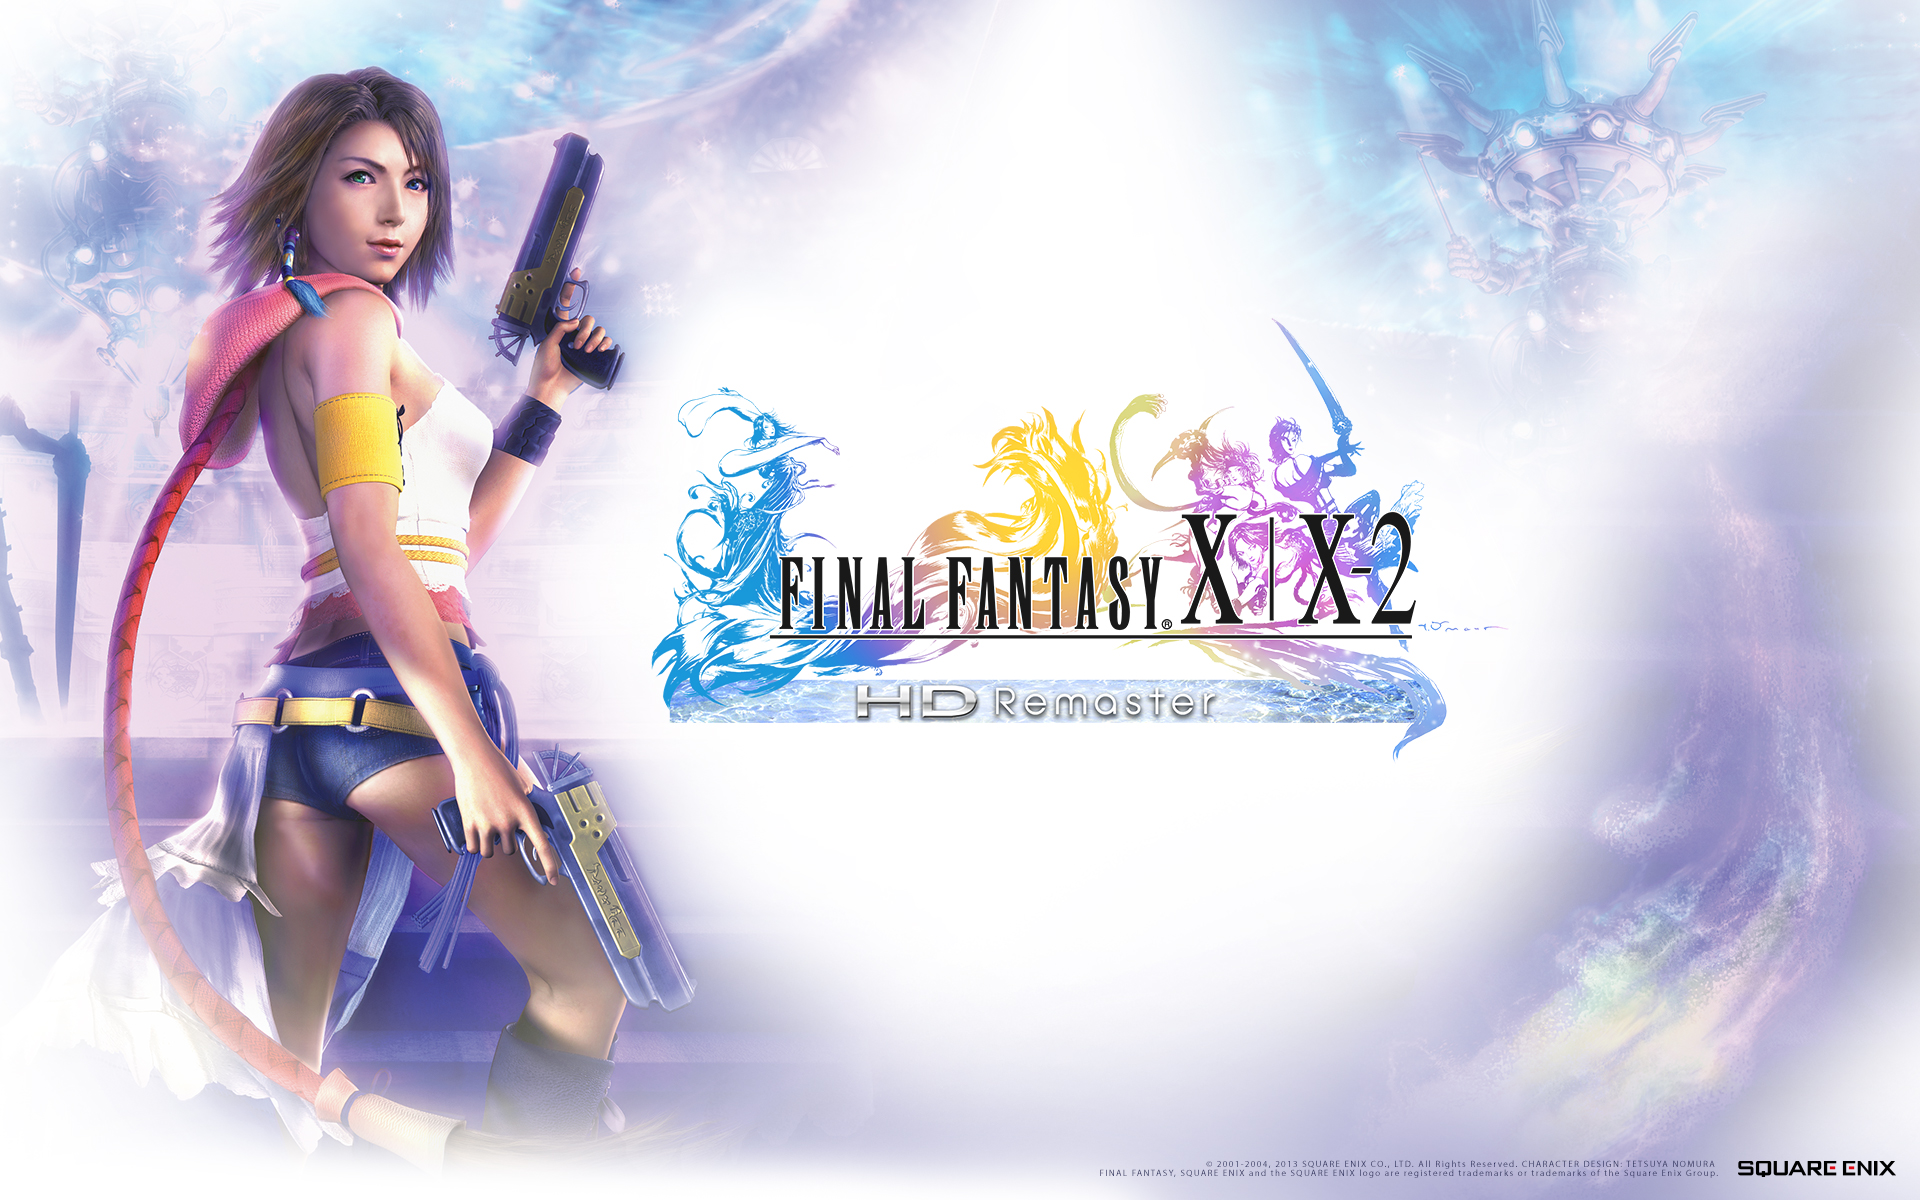 Final Fantasy X Wallpaper Dota And E Sports Geeks